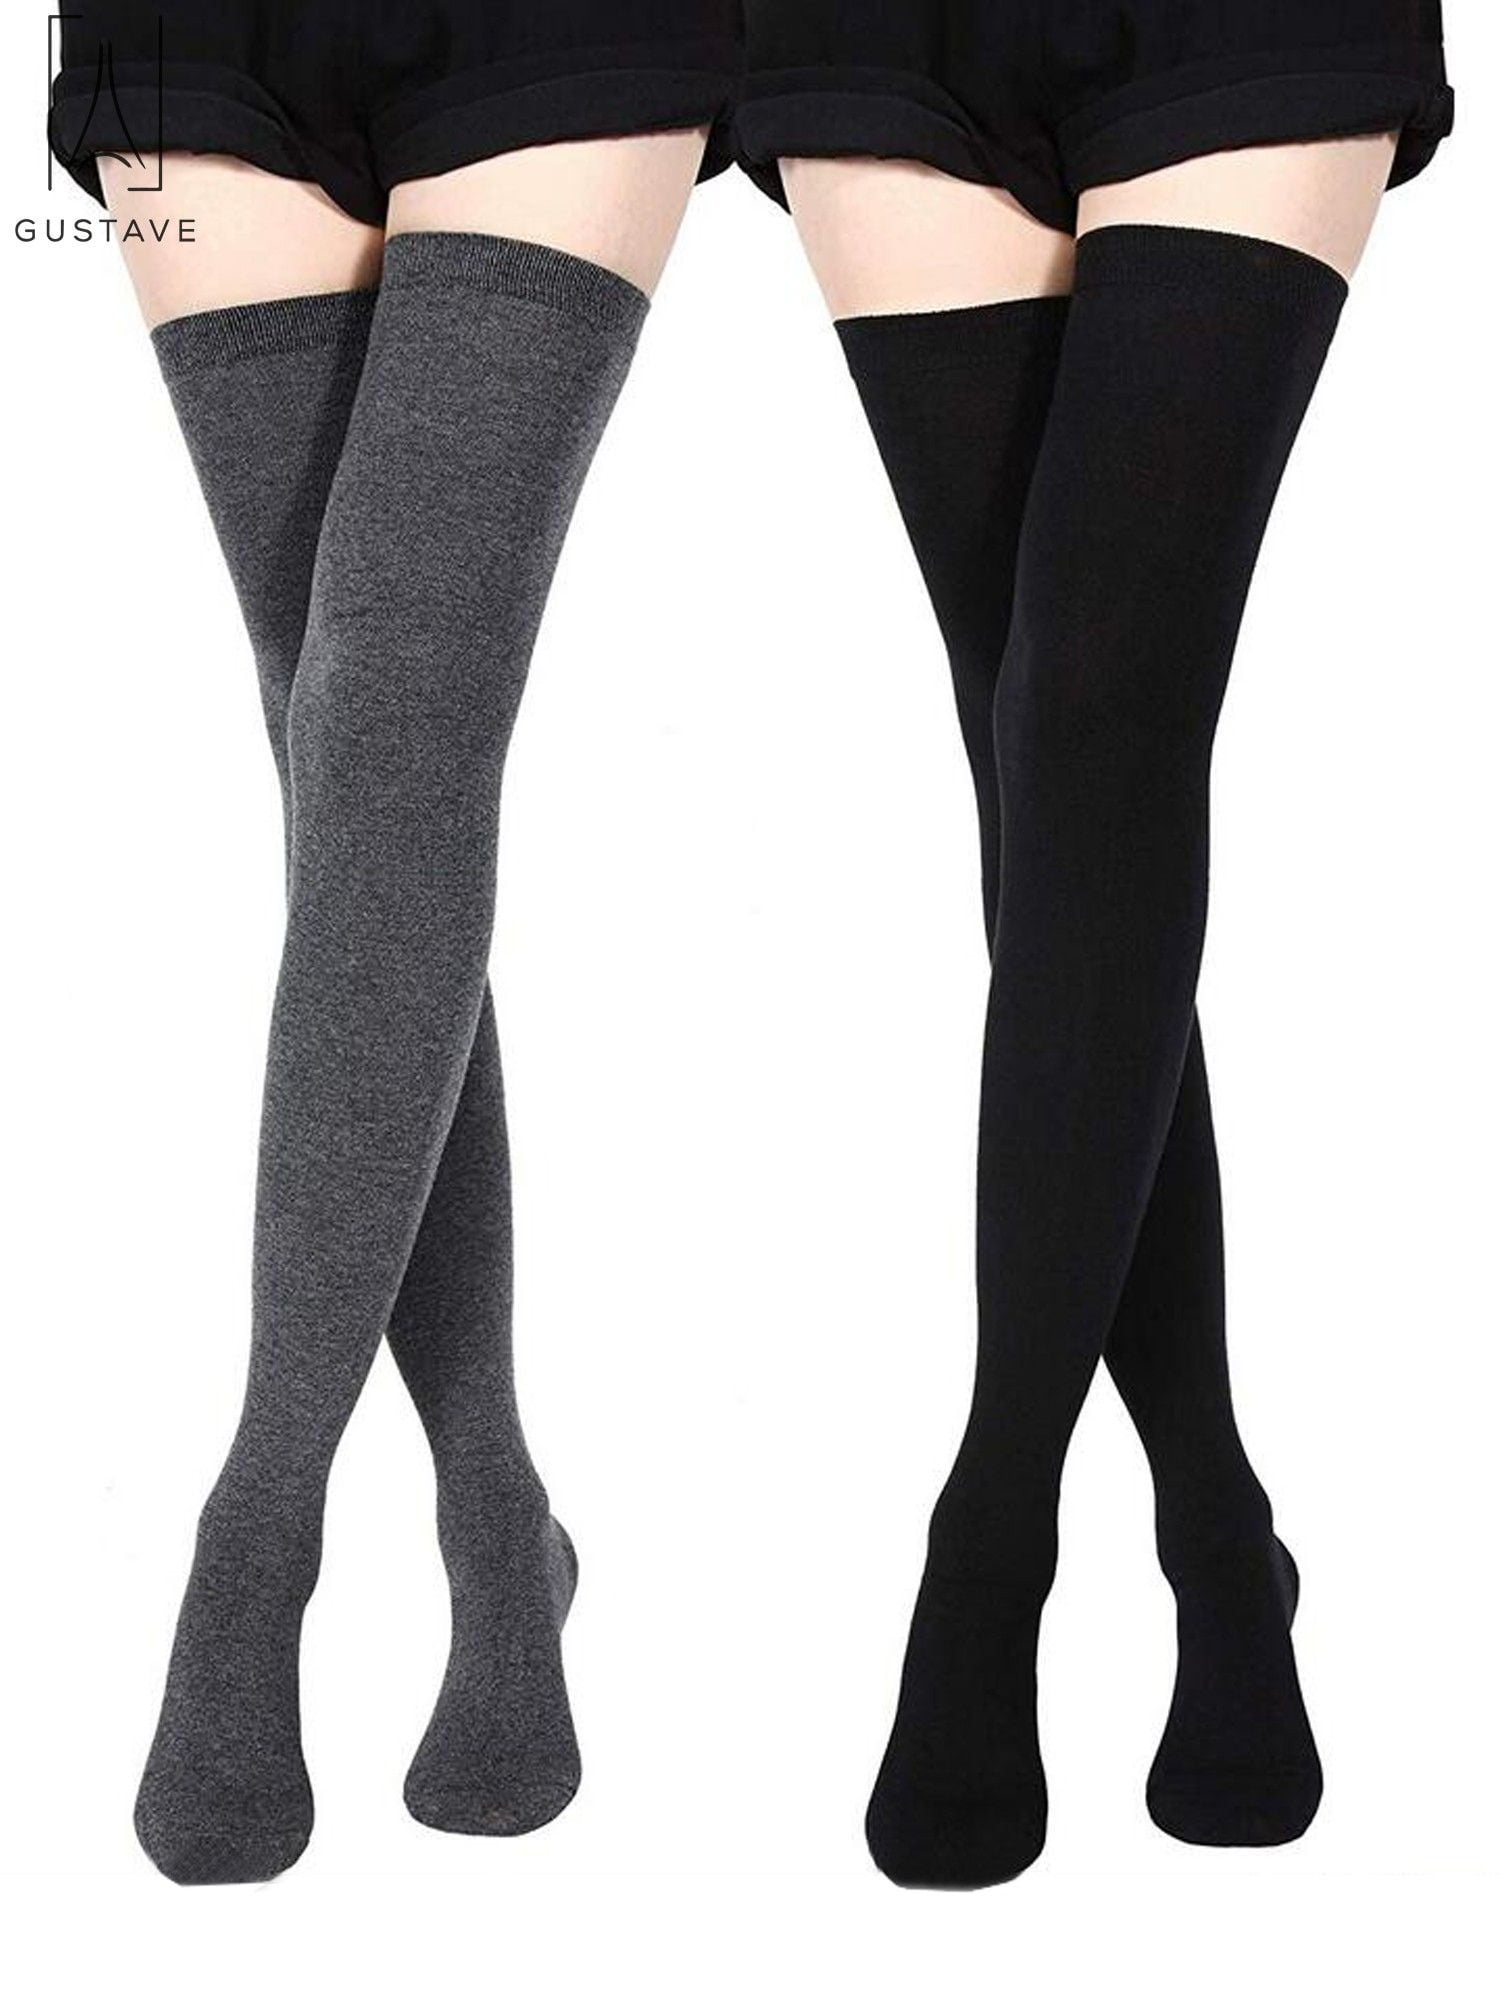 fashion funny stockings women's stockings solid thigh high socks creative  dance party long socks Halloween knee